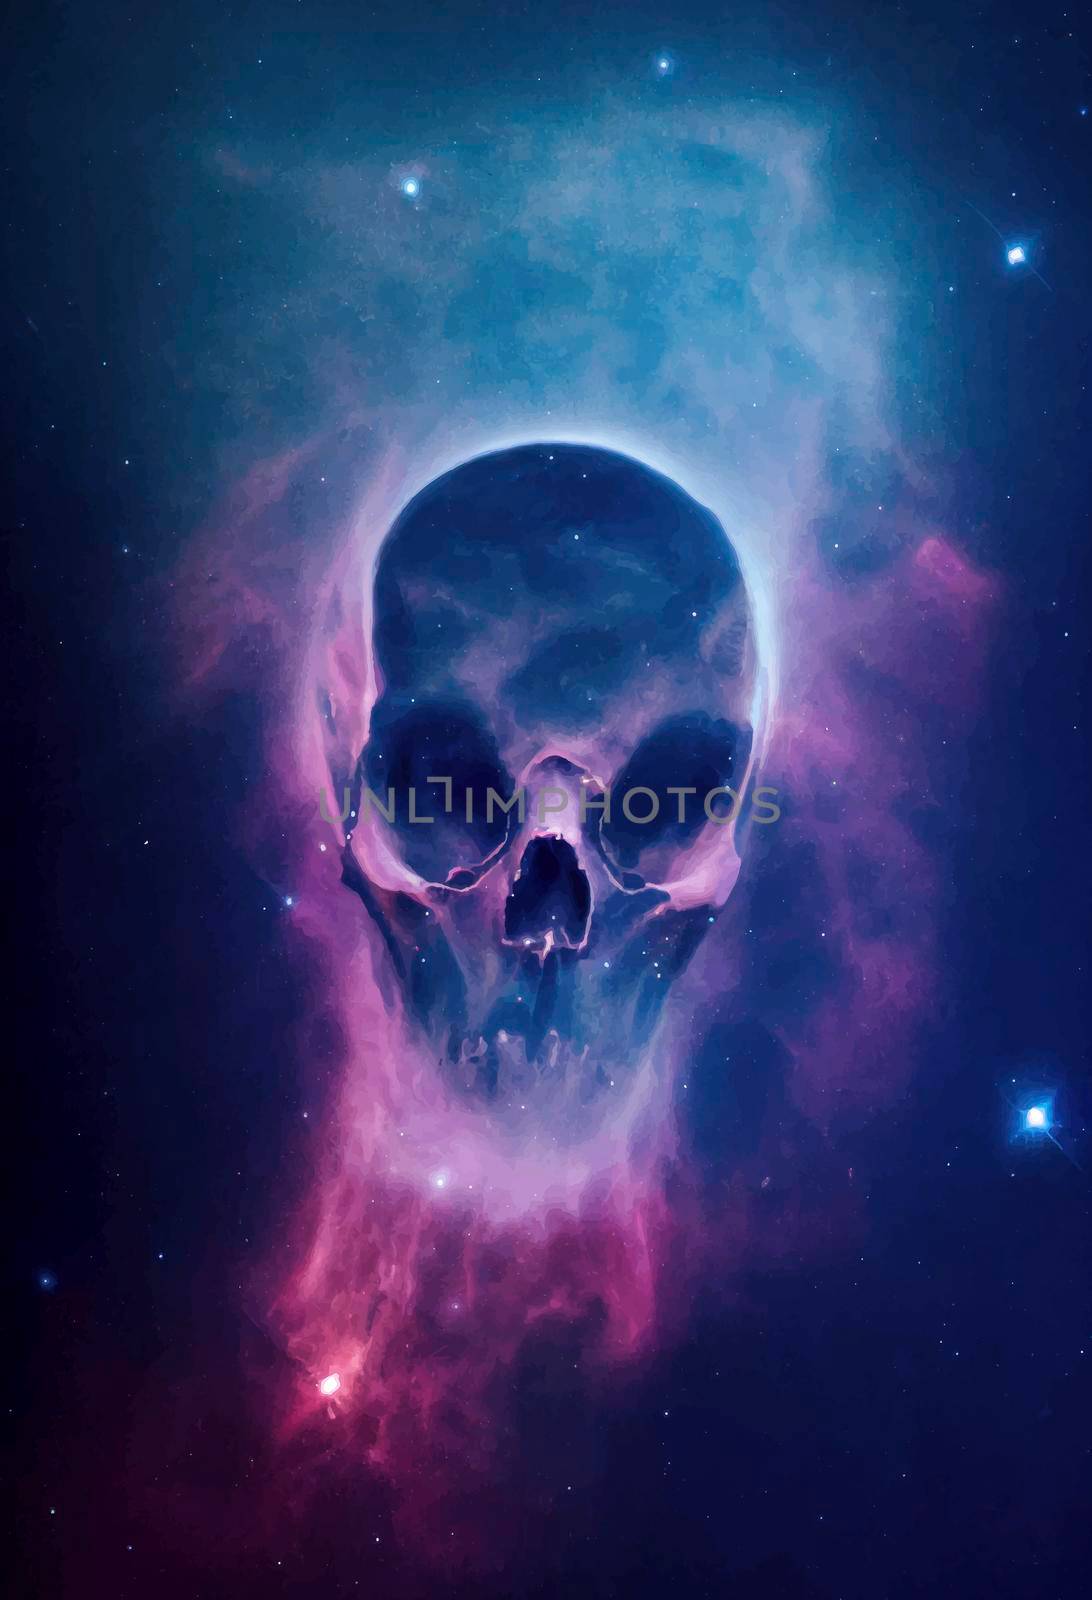 nebula in outer space. nebula shaped like a human skull by JpRamos